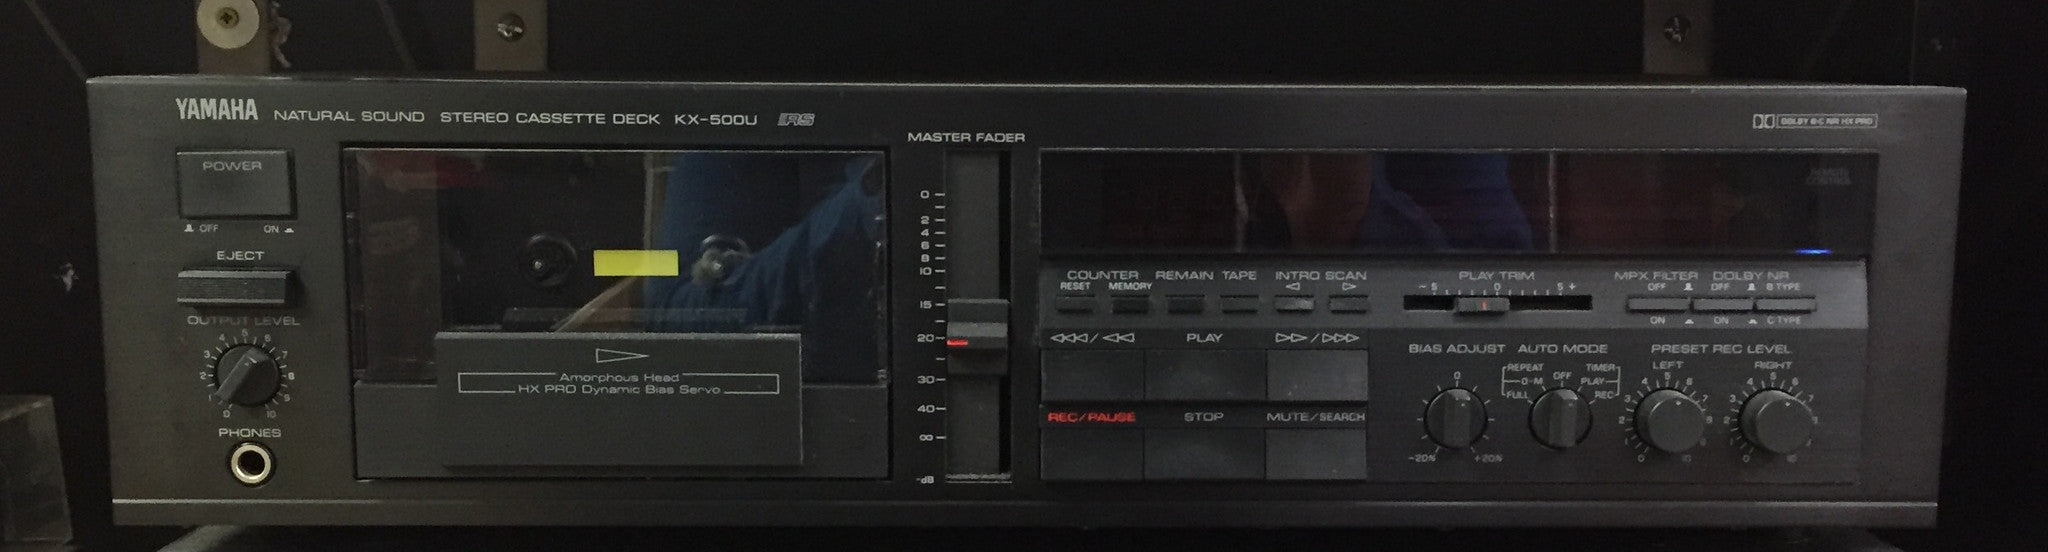 Yamaha KX-500U - Natural Sound Stereo tape Cassette Deck - EX Shape 100% Tested With Original Box, Manual, Remote Control